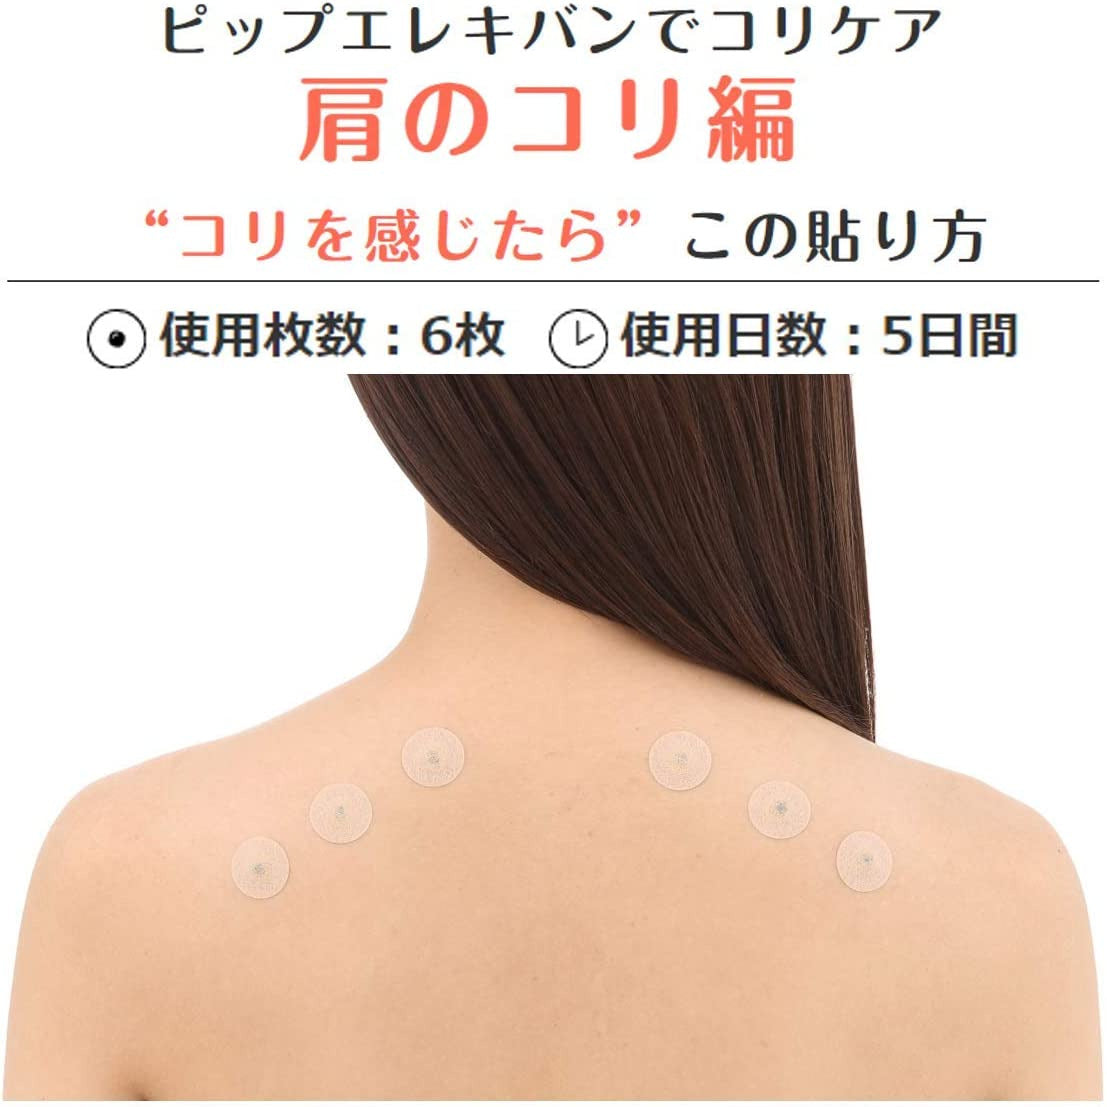 Pip Elekiban 80 magnetic therapy device shoulder stiffness neck waist 12pcs